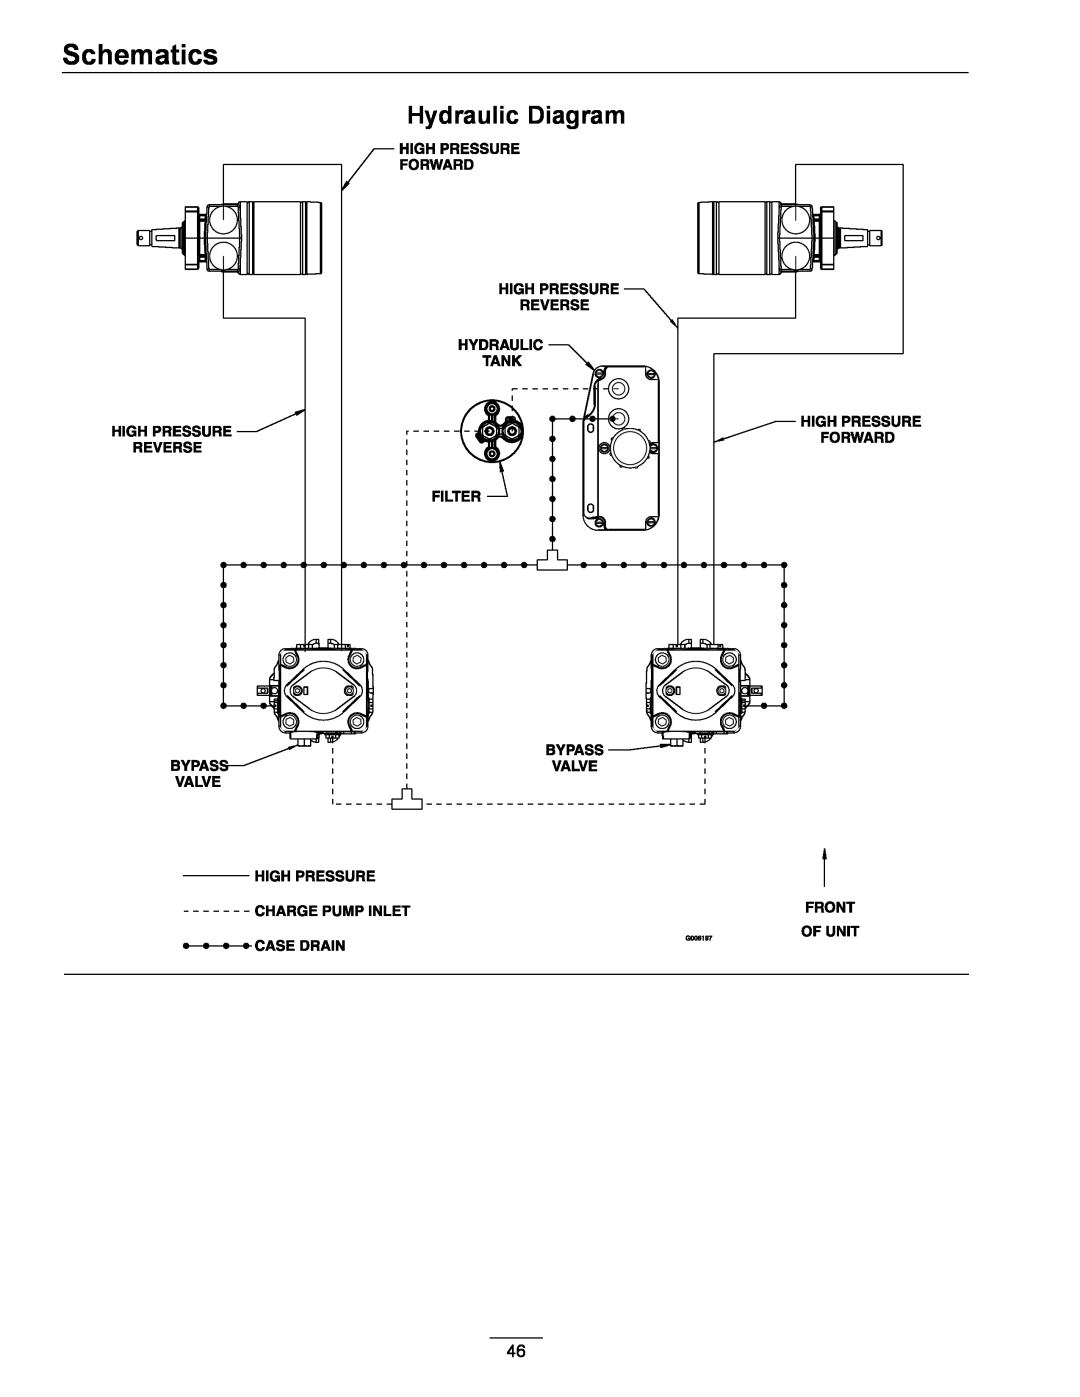 Exmark 312, 000 & higher manual Hydraulic Diagram, Schematics 